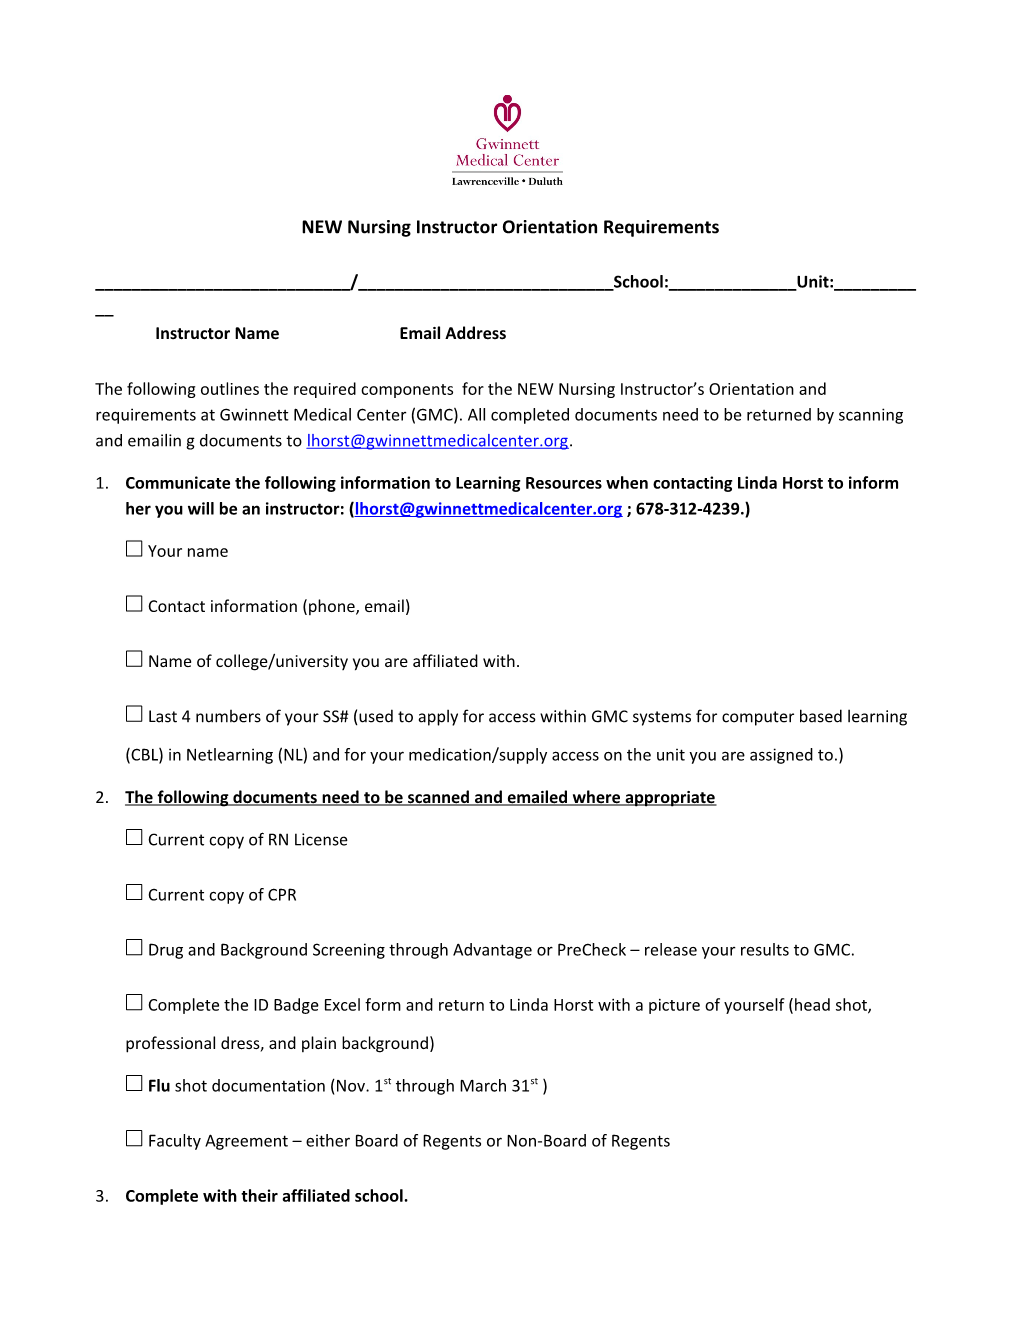 NEW Nursing Instructor Orientation Requirements